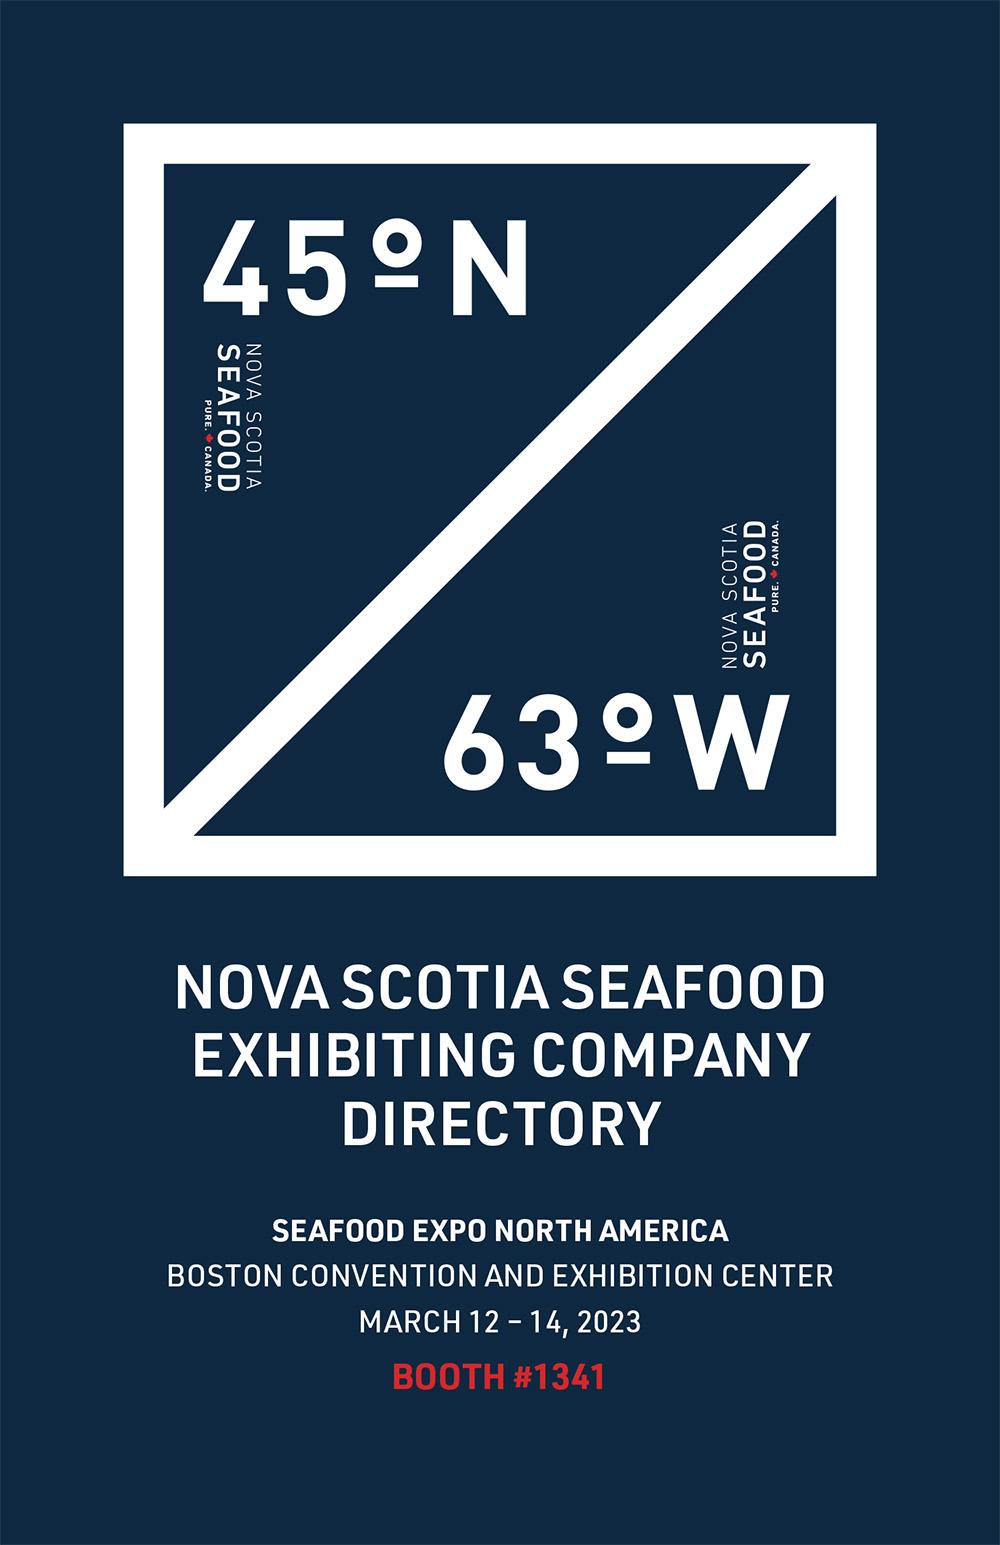 Cover image of Seafood Expo North America 2023 Nova Scotia exhibiting company directory